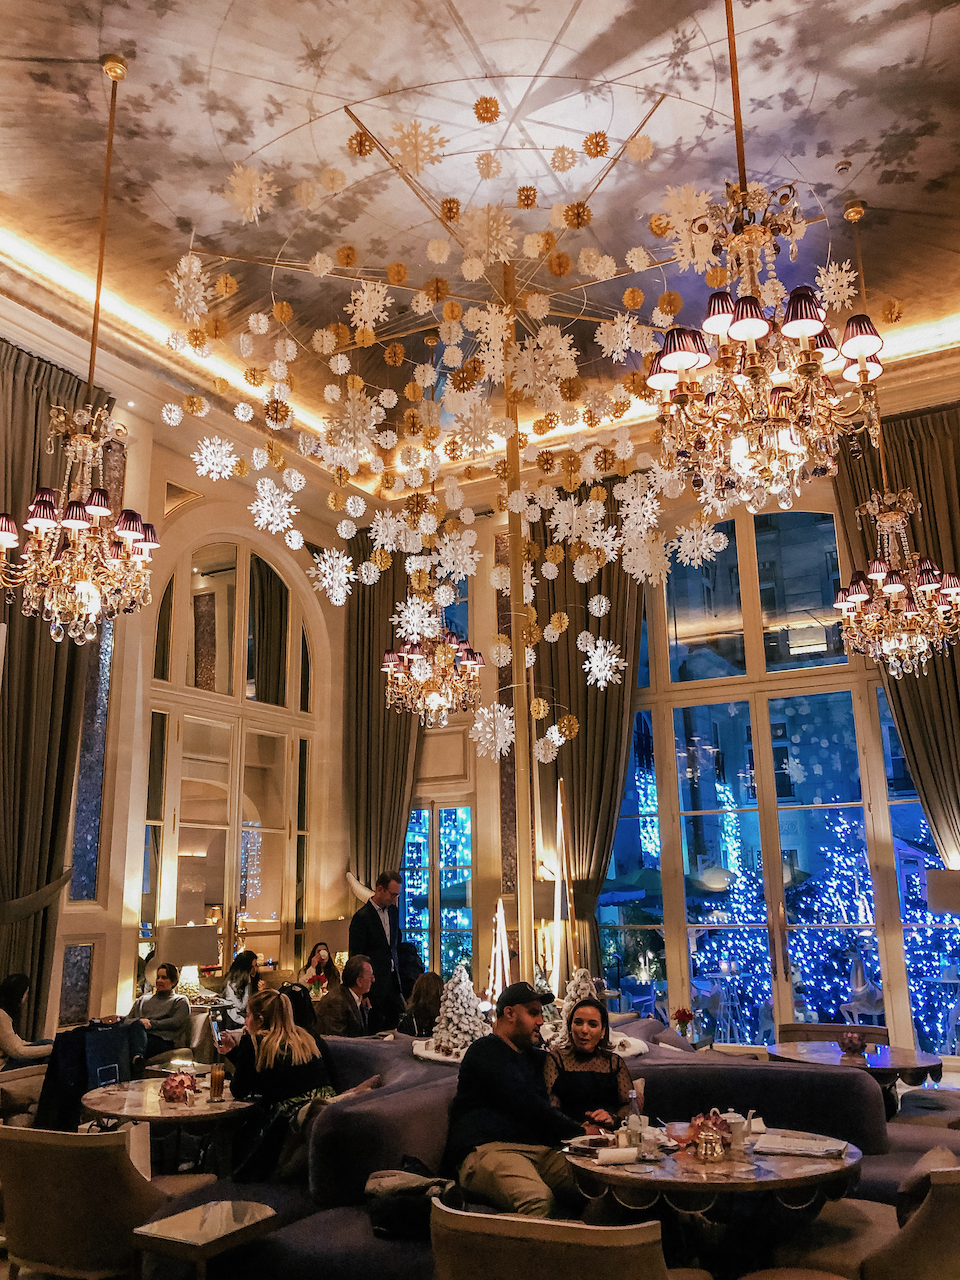 The interiors of Hotel de Crillon - Paris - France